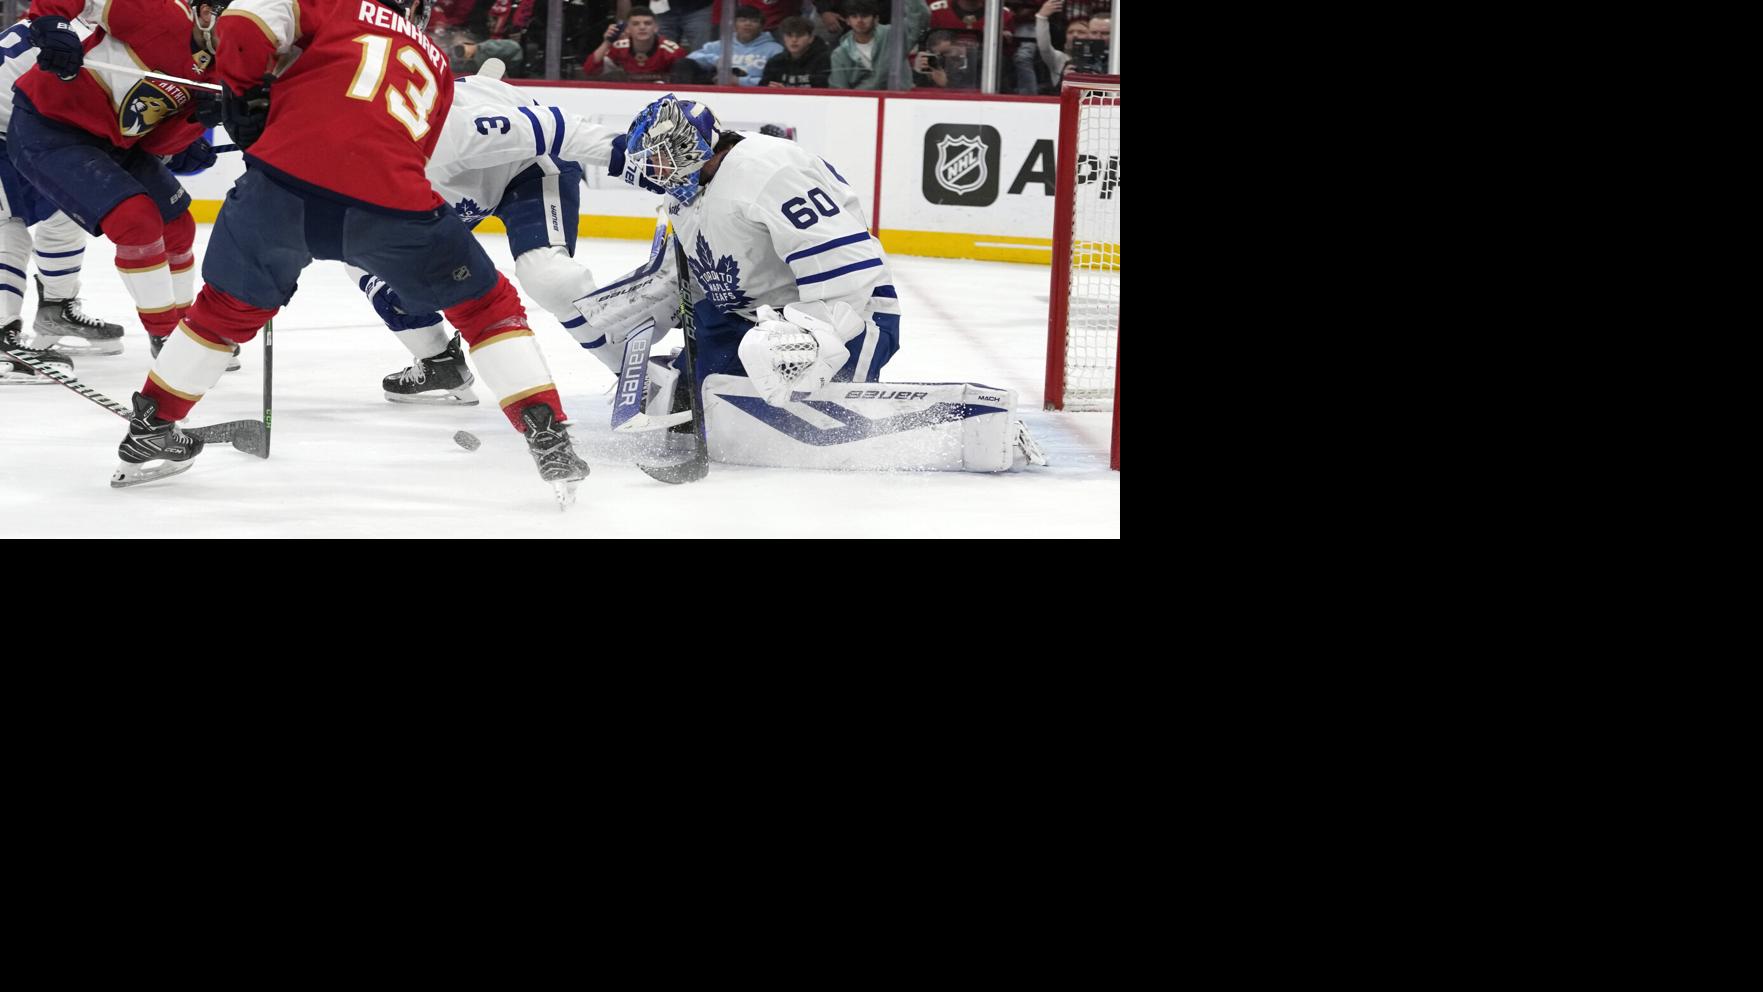 Woll stops 24, Maple Leafs avoid elimination